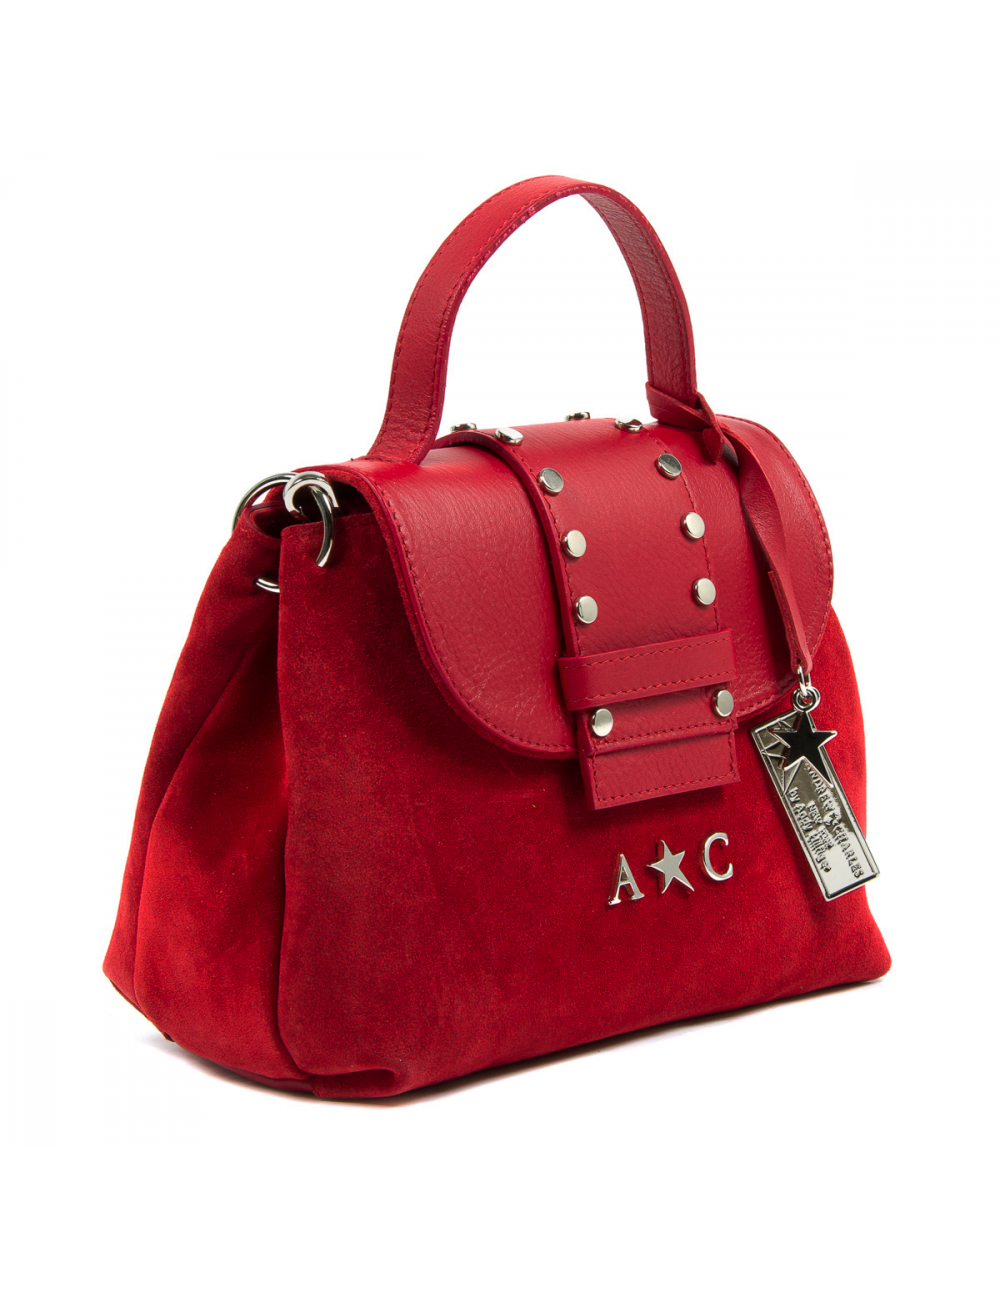 Andrew Charles Womens Handbag Red PAMELA - YuppyCollections